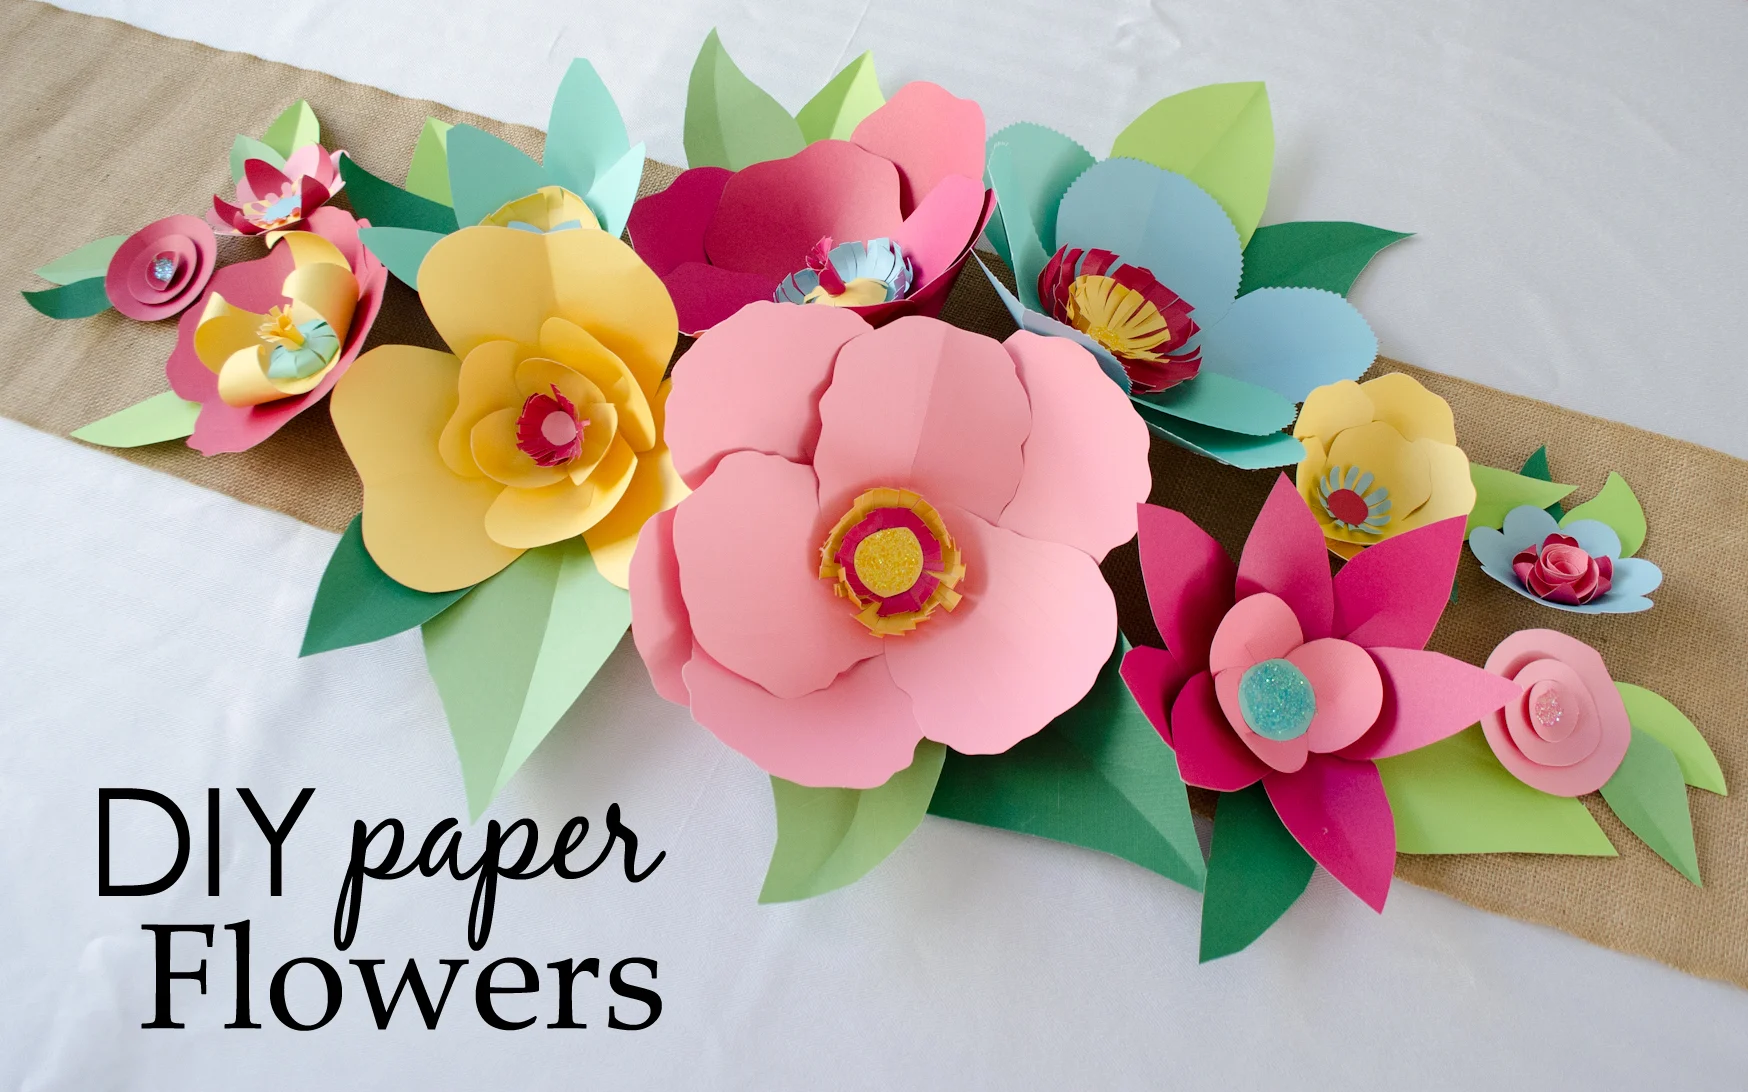 https://projectnursery.com/wp-content/uploads/2015/02/DIY-Paper-Flowers.png.webp